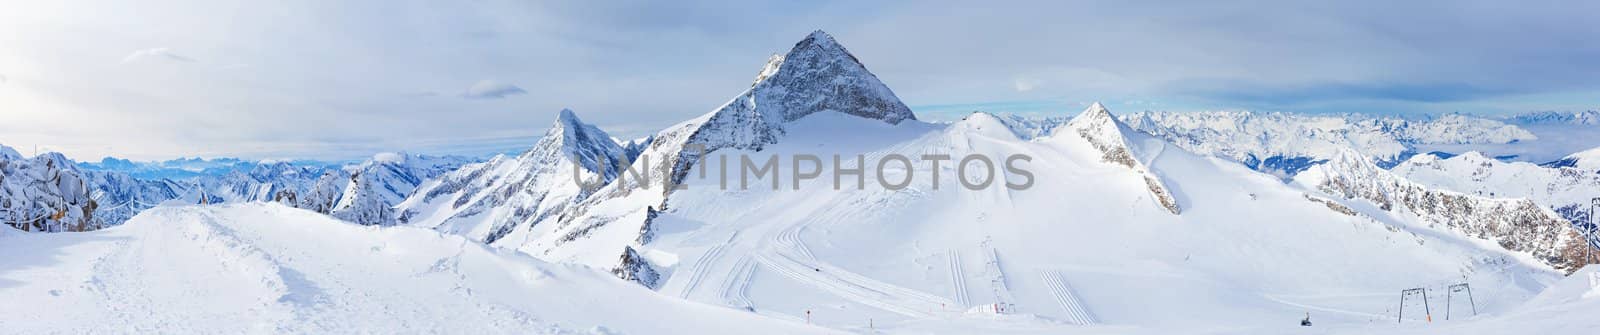 Ski resort Zillertal Hintertuxer Glacier. Austria by maxoliki